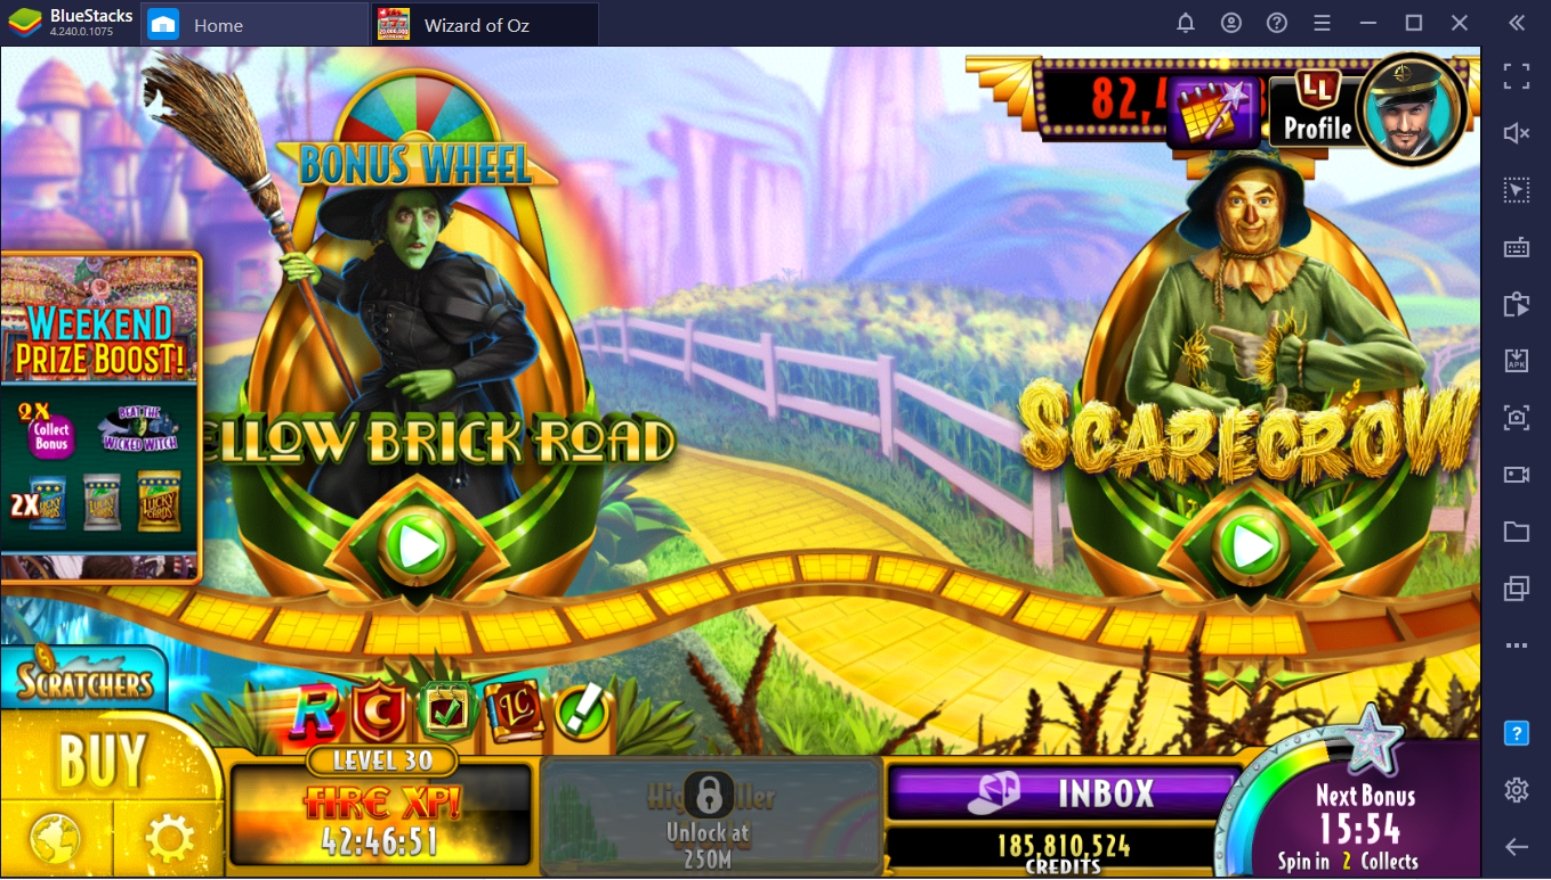 Wizard of Oz Casino - Tips & Tricks to Win Big on PC